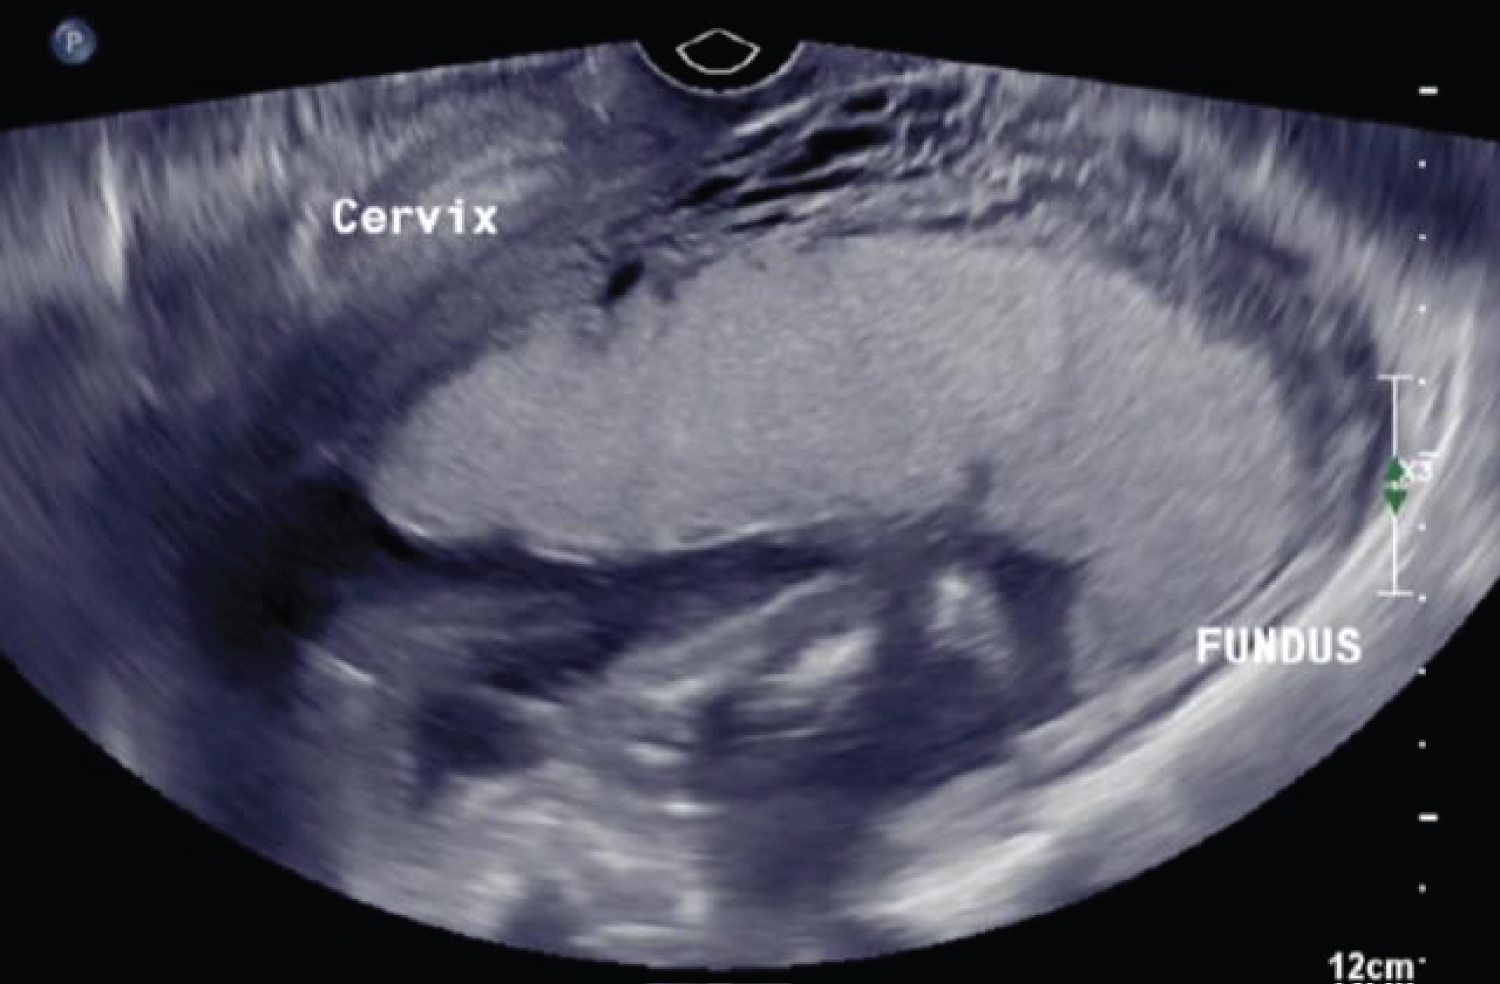 Acute urinary retention due to a nonincarcerated retroverted gravid uterus